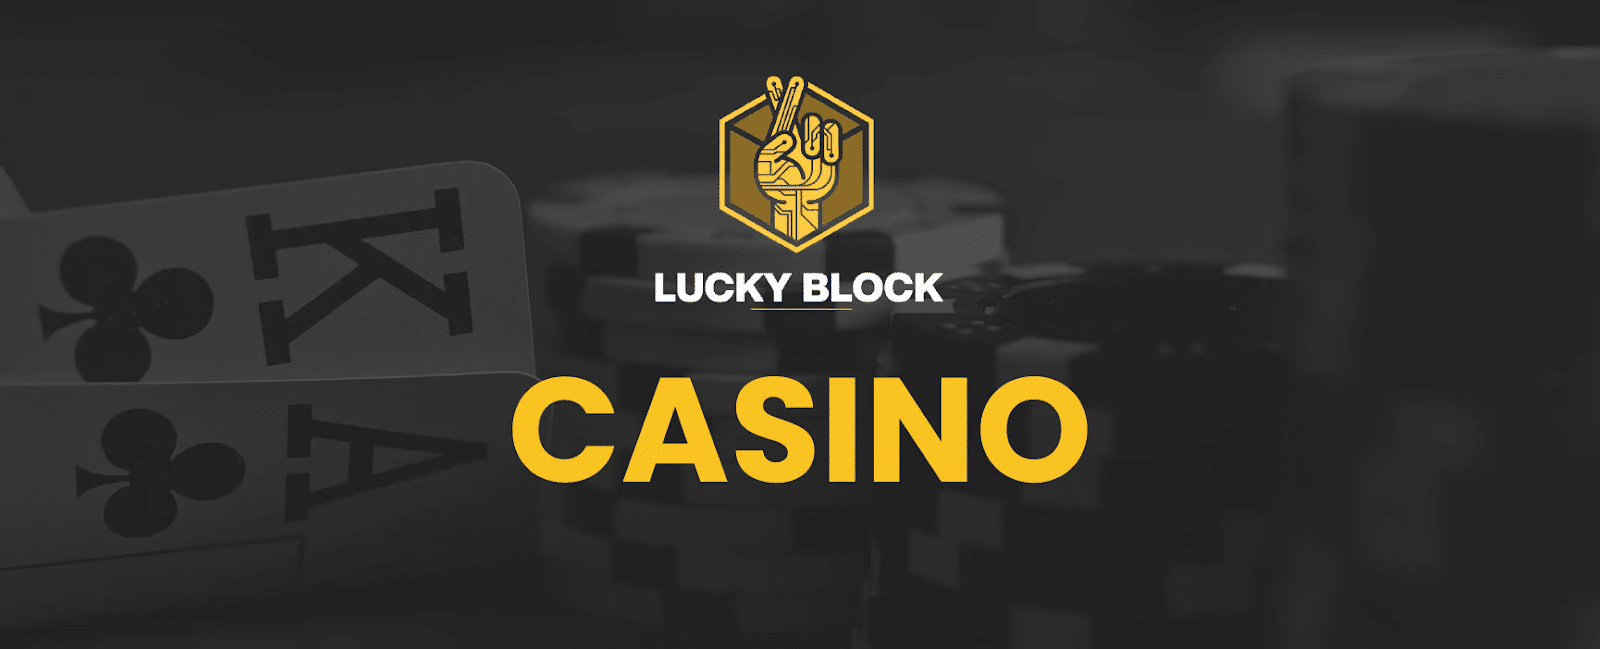 Signn-up at Lucky Block Casino